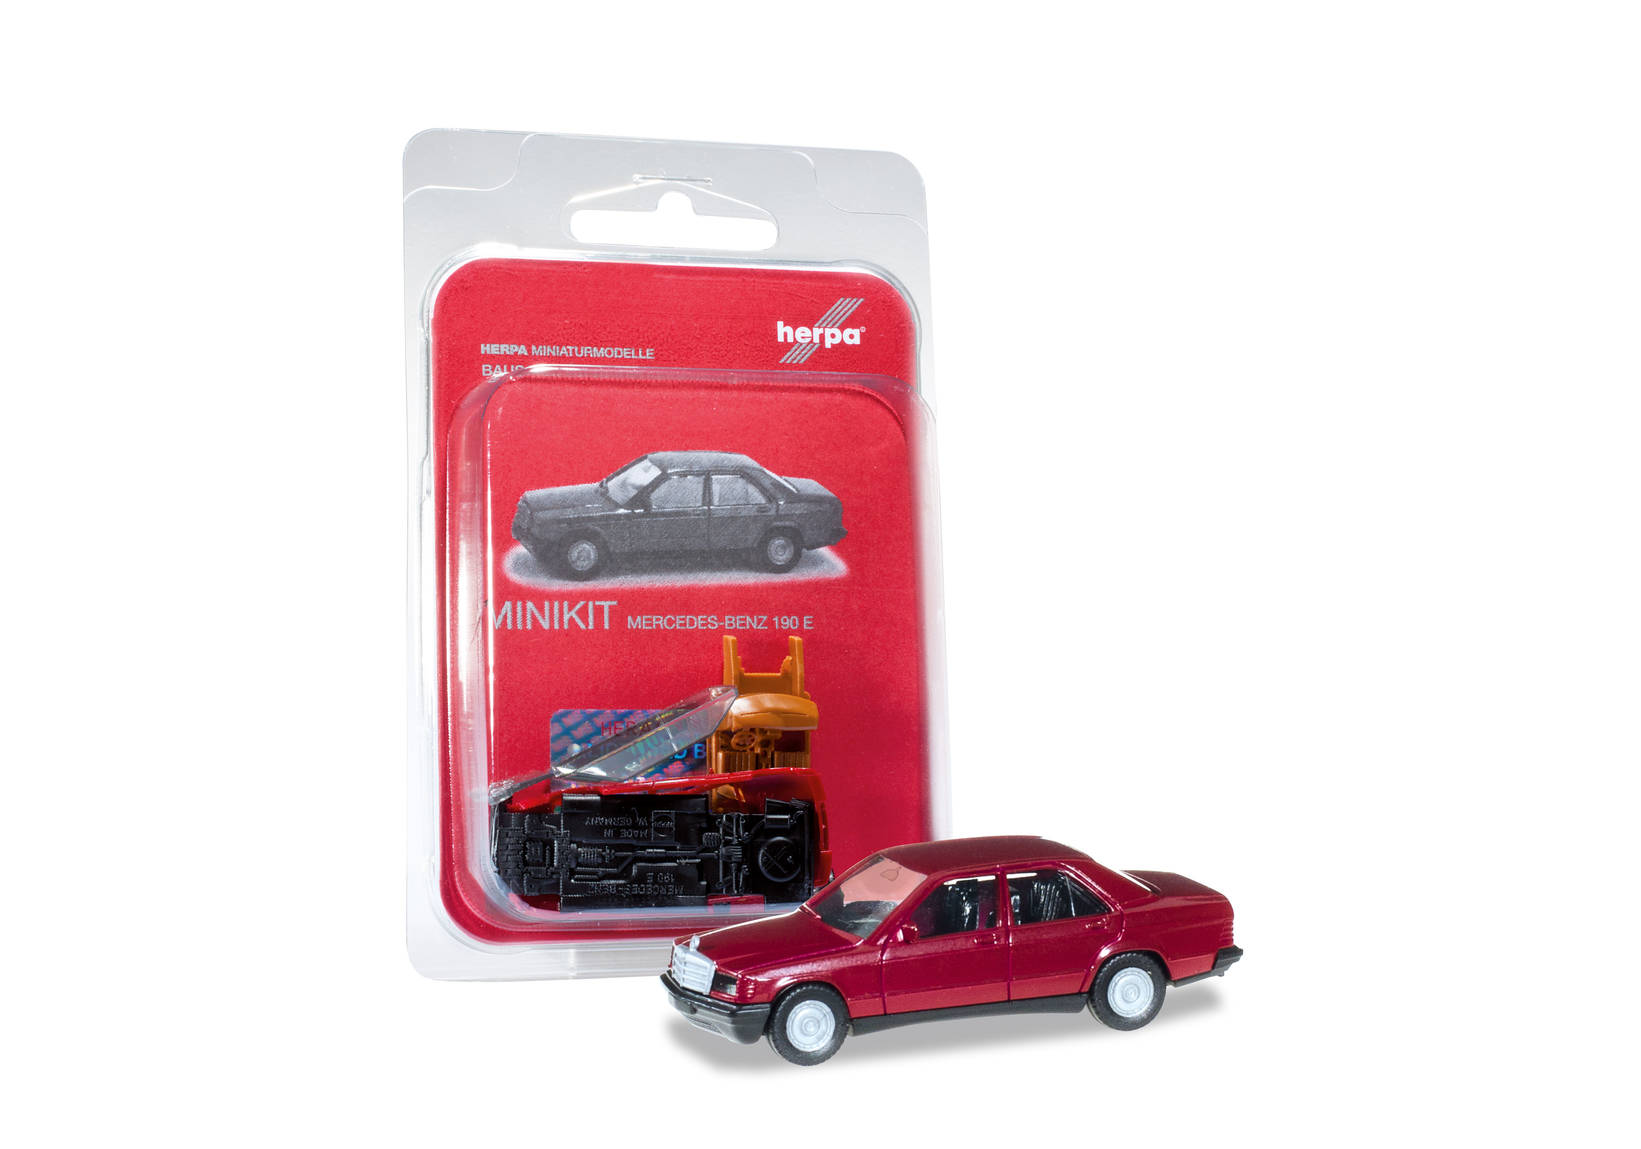 Herpa MiniKit: Mercedes-Benz 190 E, purpur red